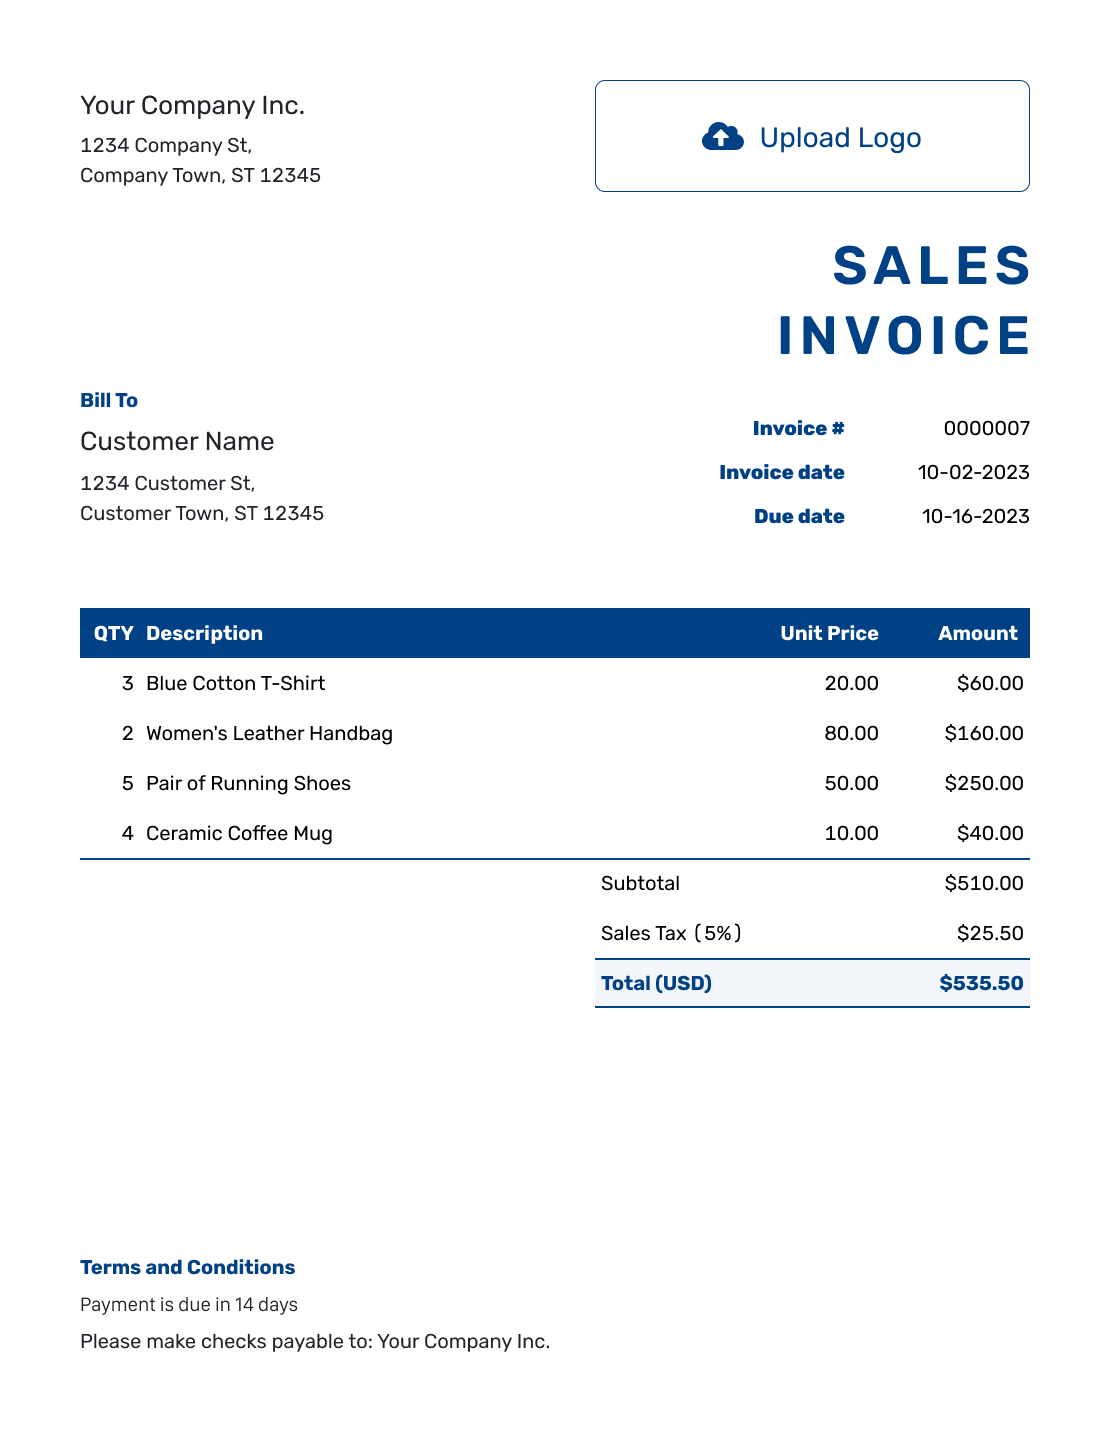 Sample Sales Invoice Template